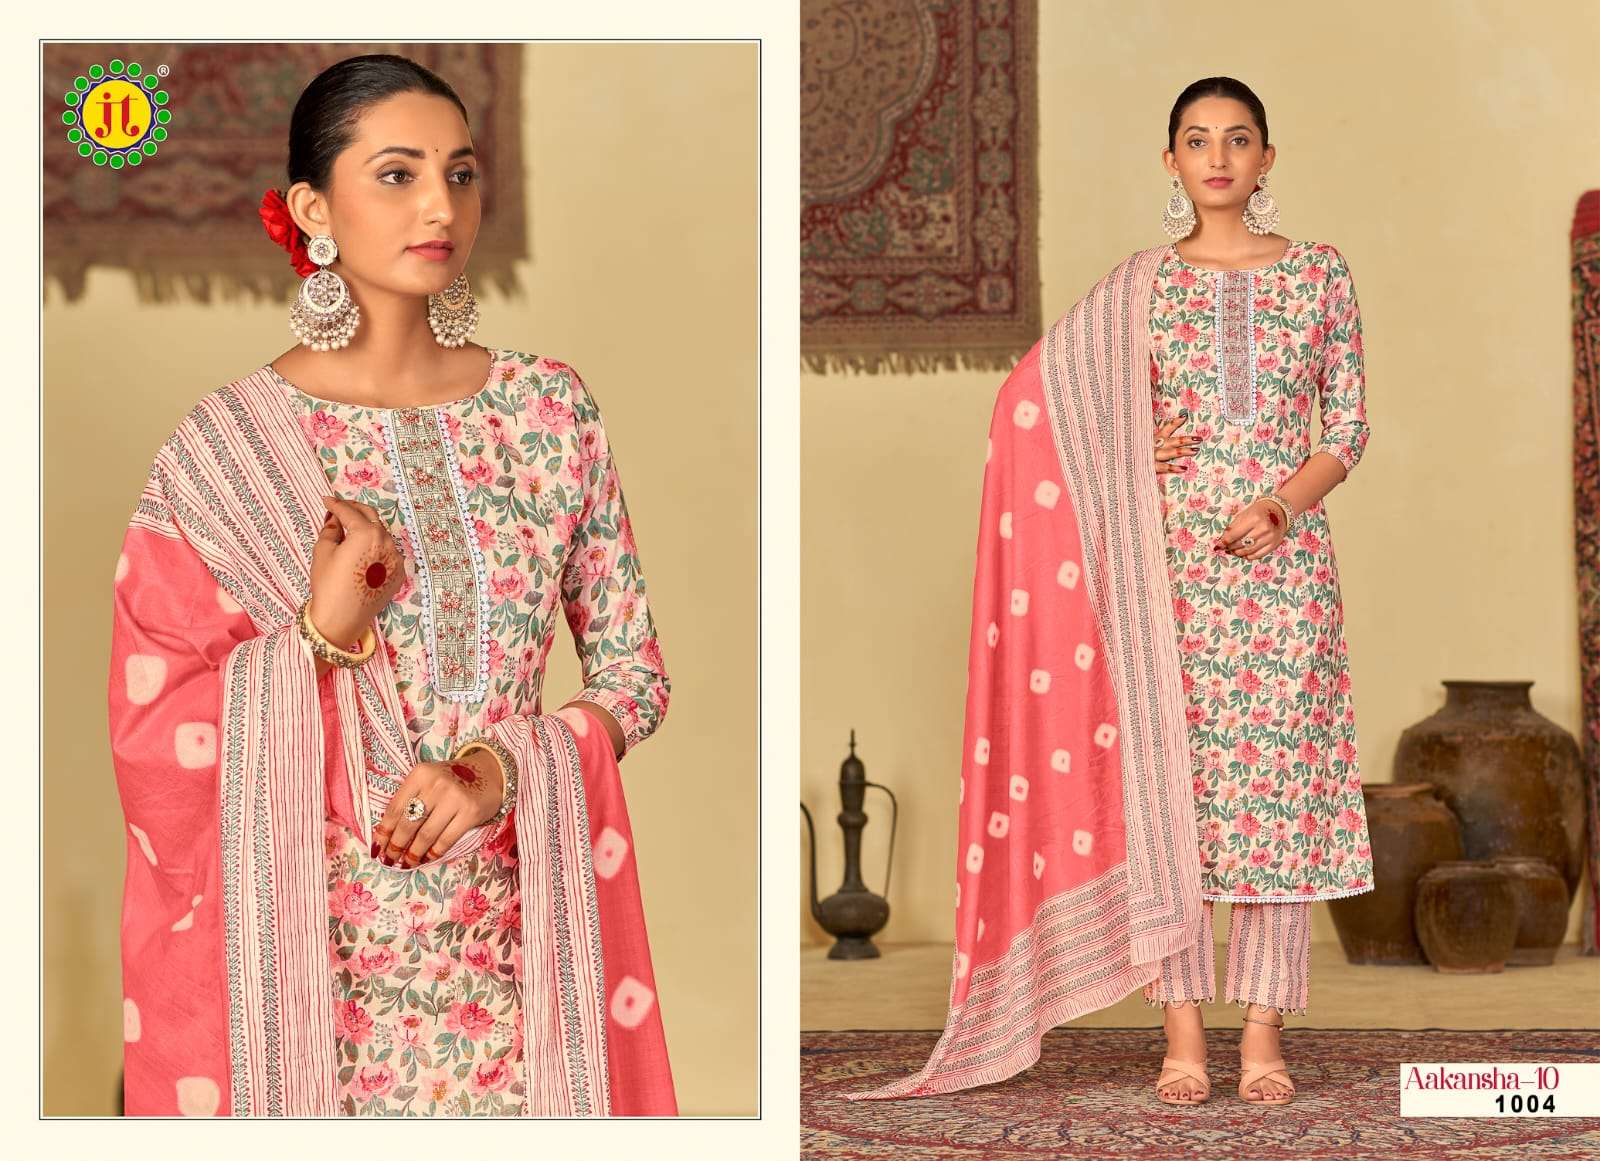 Jt Aakansha Vol 10 Dress Material Wholesale catalog